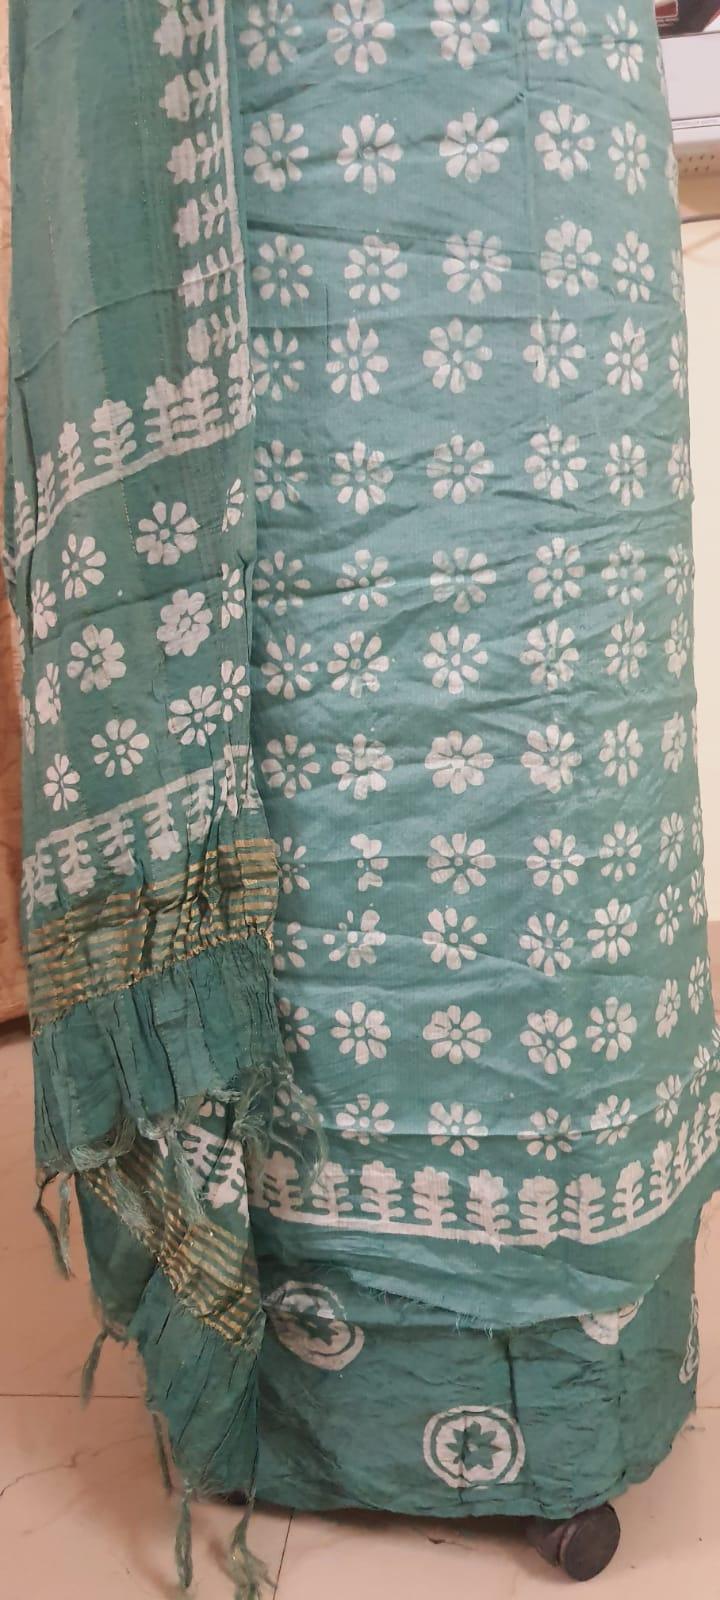 Turquoise Batik Cotton Silk Salwar kameez Dress material Ev04 - Ethnic's By Anvi Creations